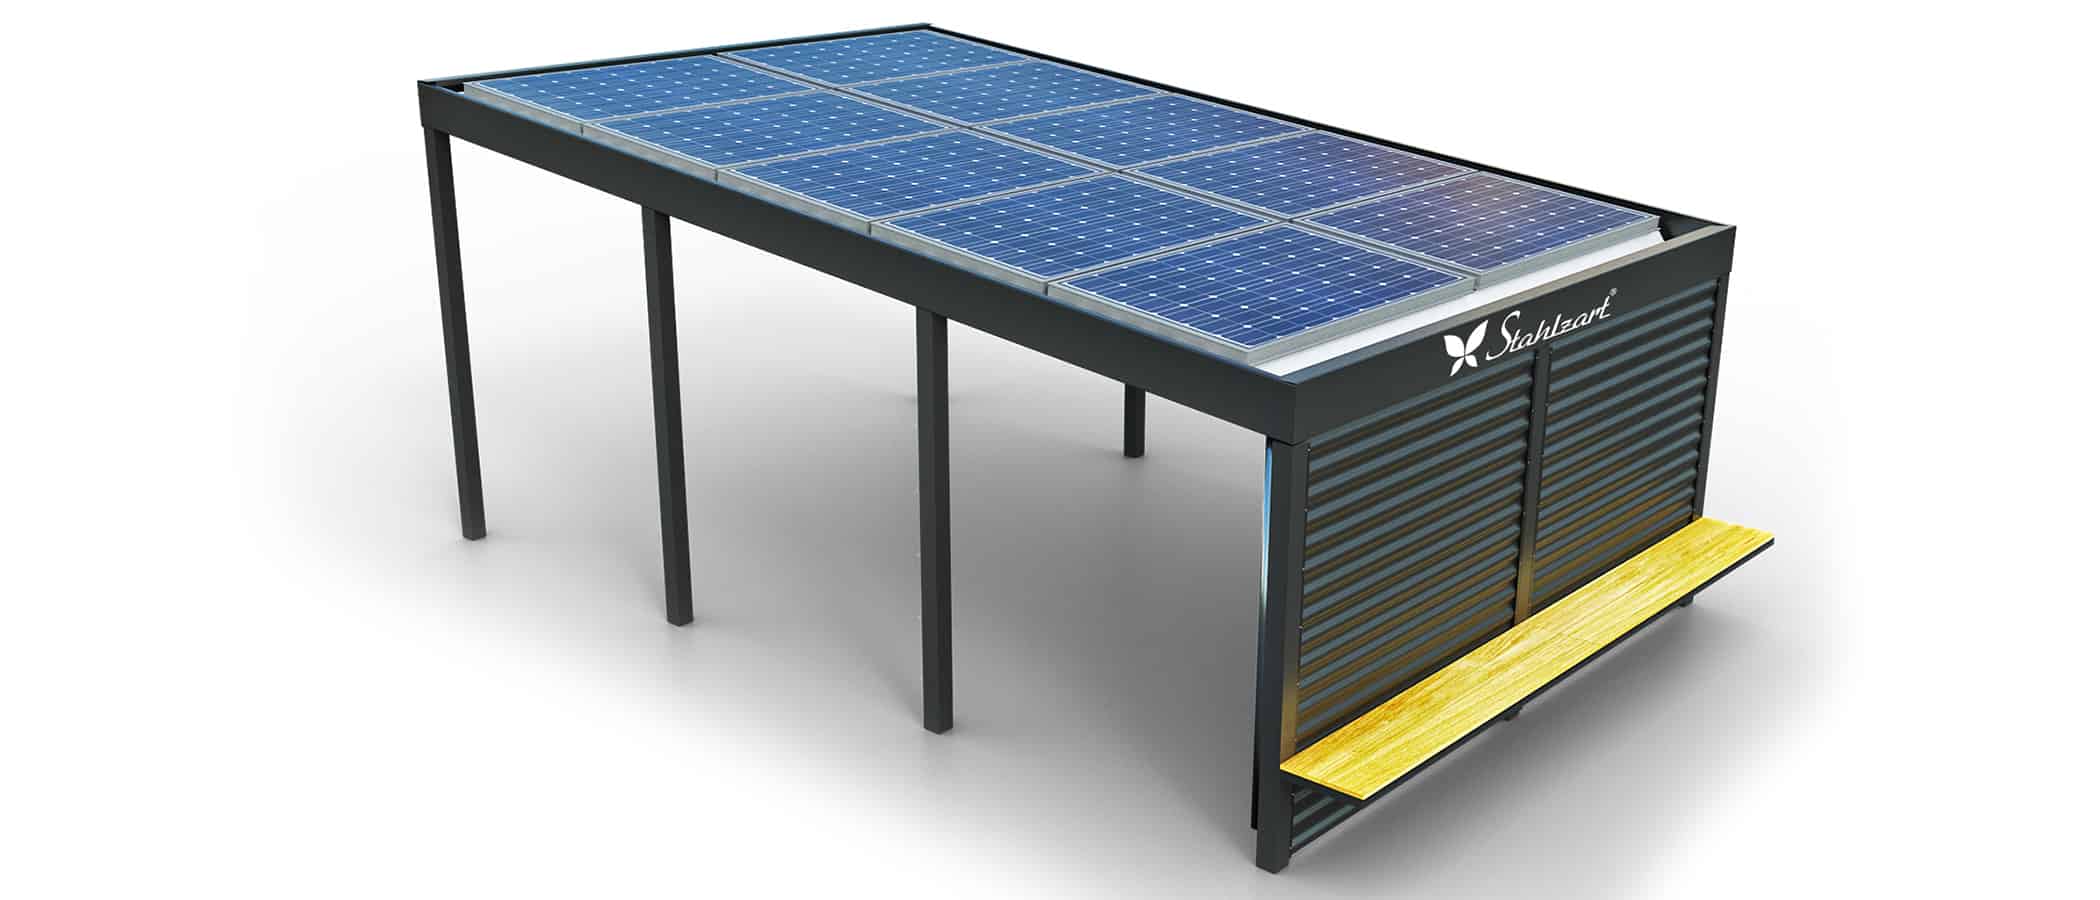 solar-carport-mit-pultdach-carports-solarcarport-pultdach-carportdach-design-strom-angebot-photovoltaikanlage-module-solardach-dachflaeche-metall-stahl-mit-holz-bank-stahlzart